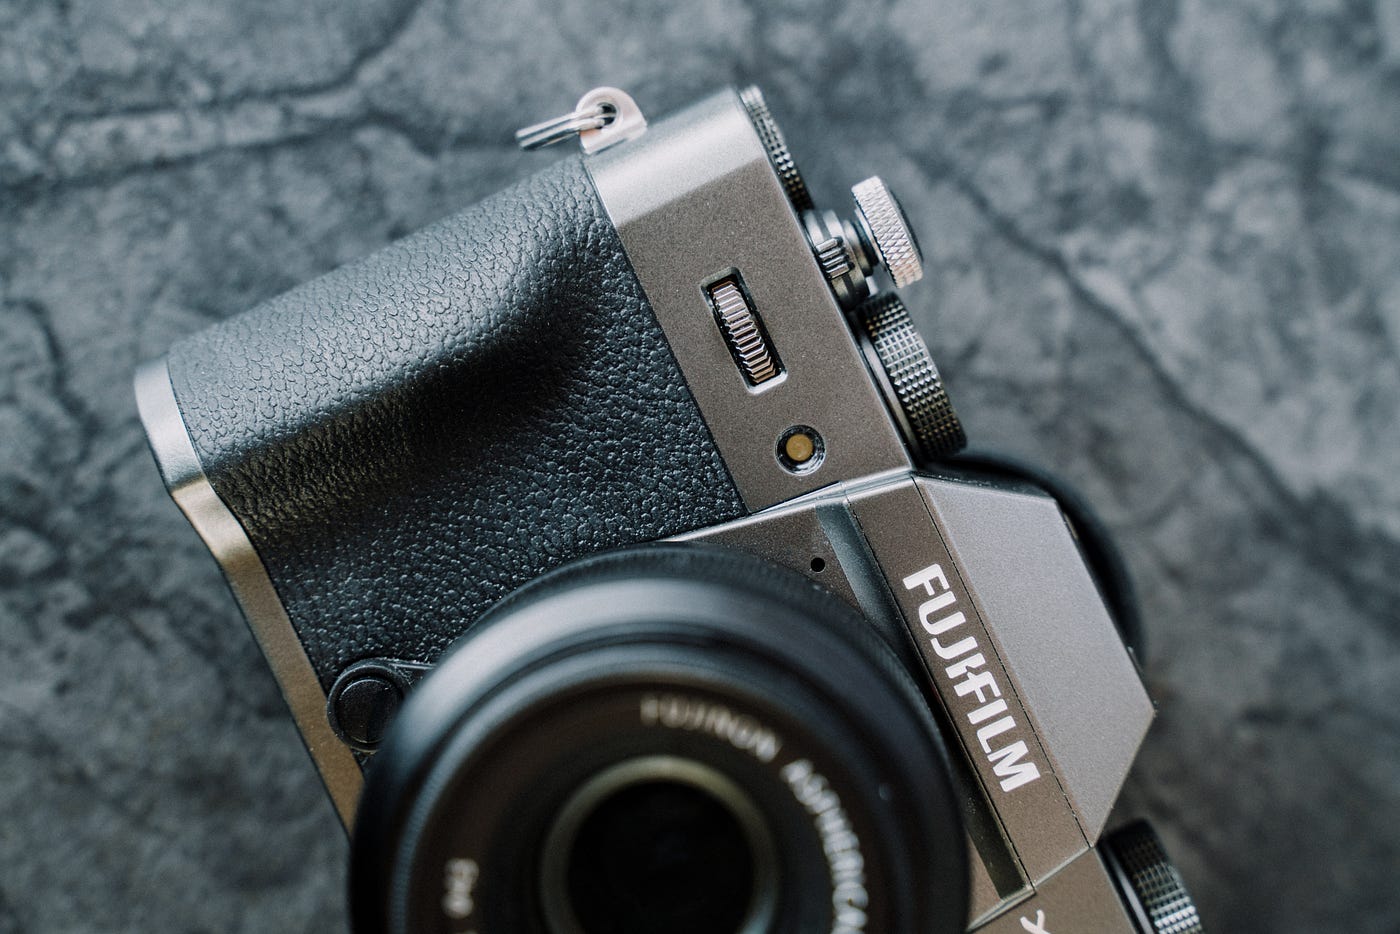 Why I bought a Fujifilm X-T30 in 2022, by FUTC